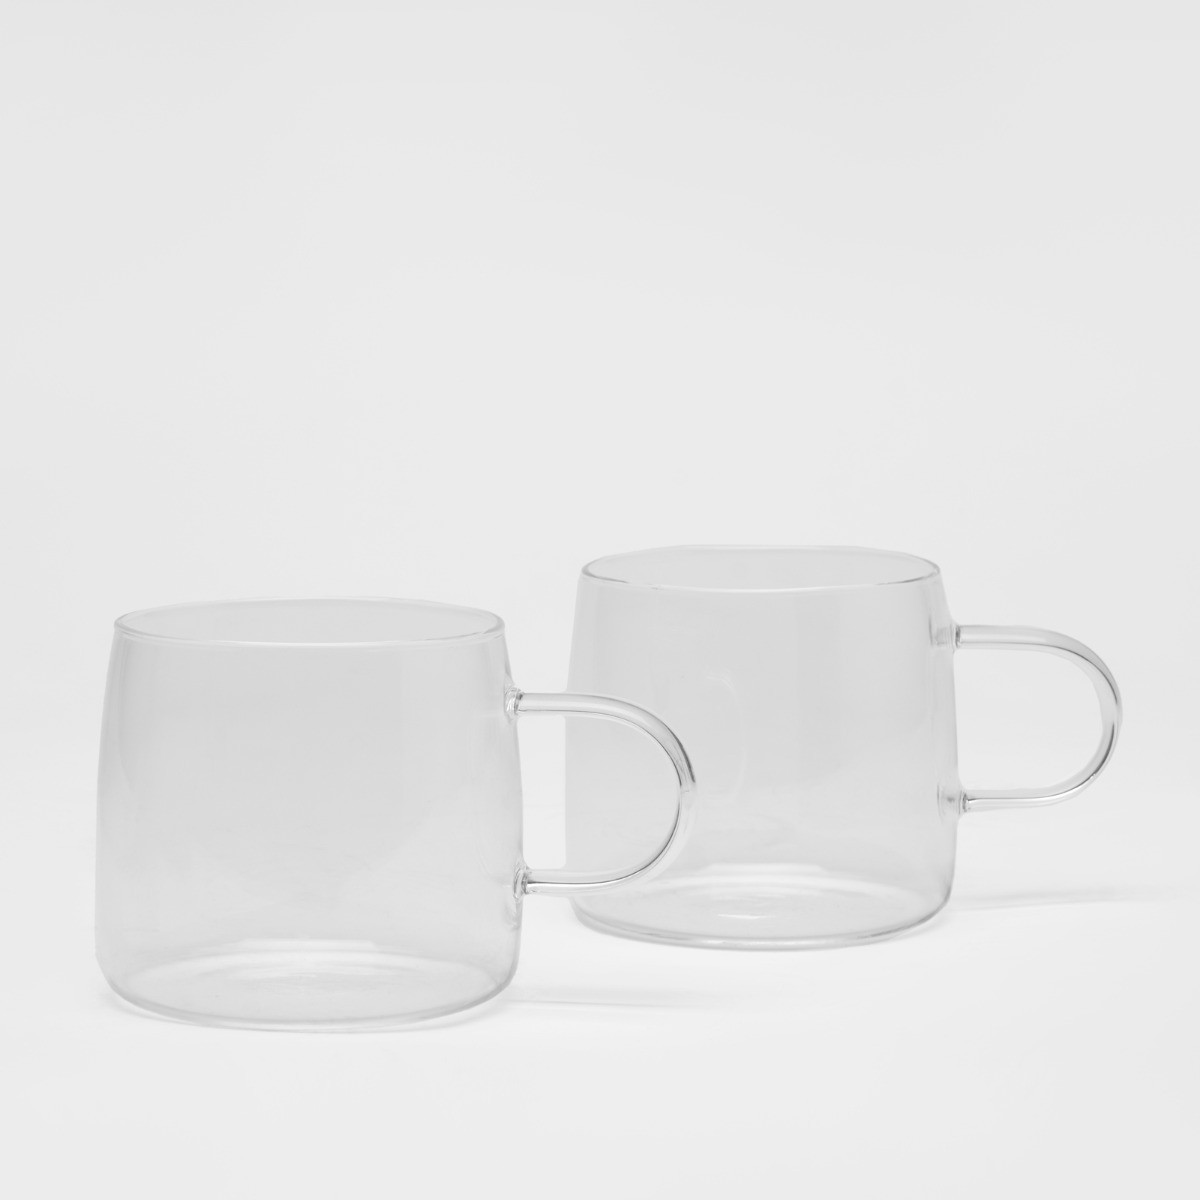 OHS Glass Mug, Clear - Set of 2>